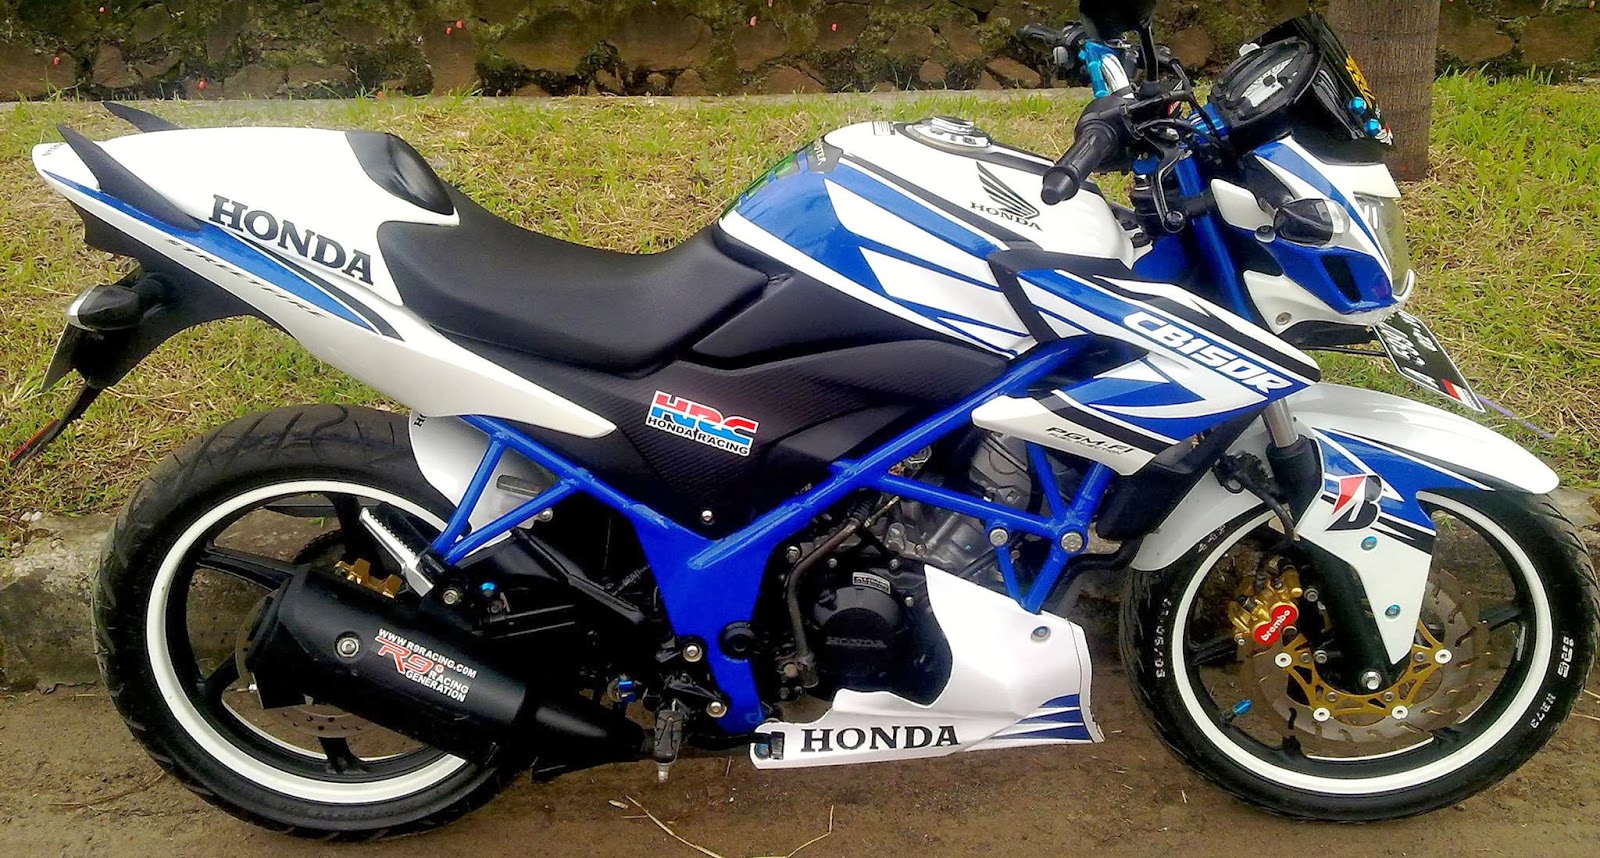 102 Modifikasi Motor Cb150r Terbaru 2014 Modifikasi Motor Honda CB